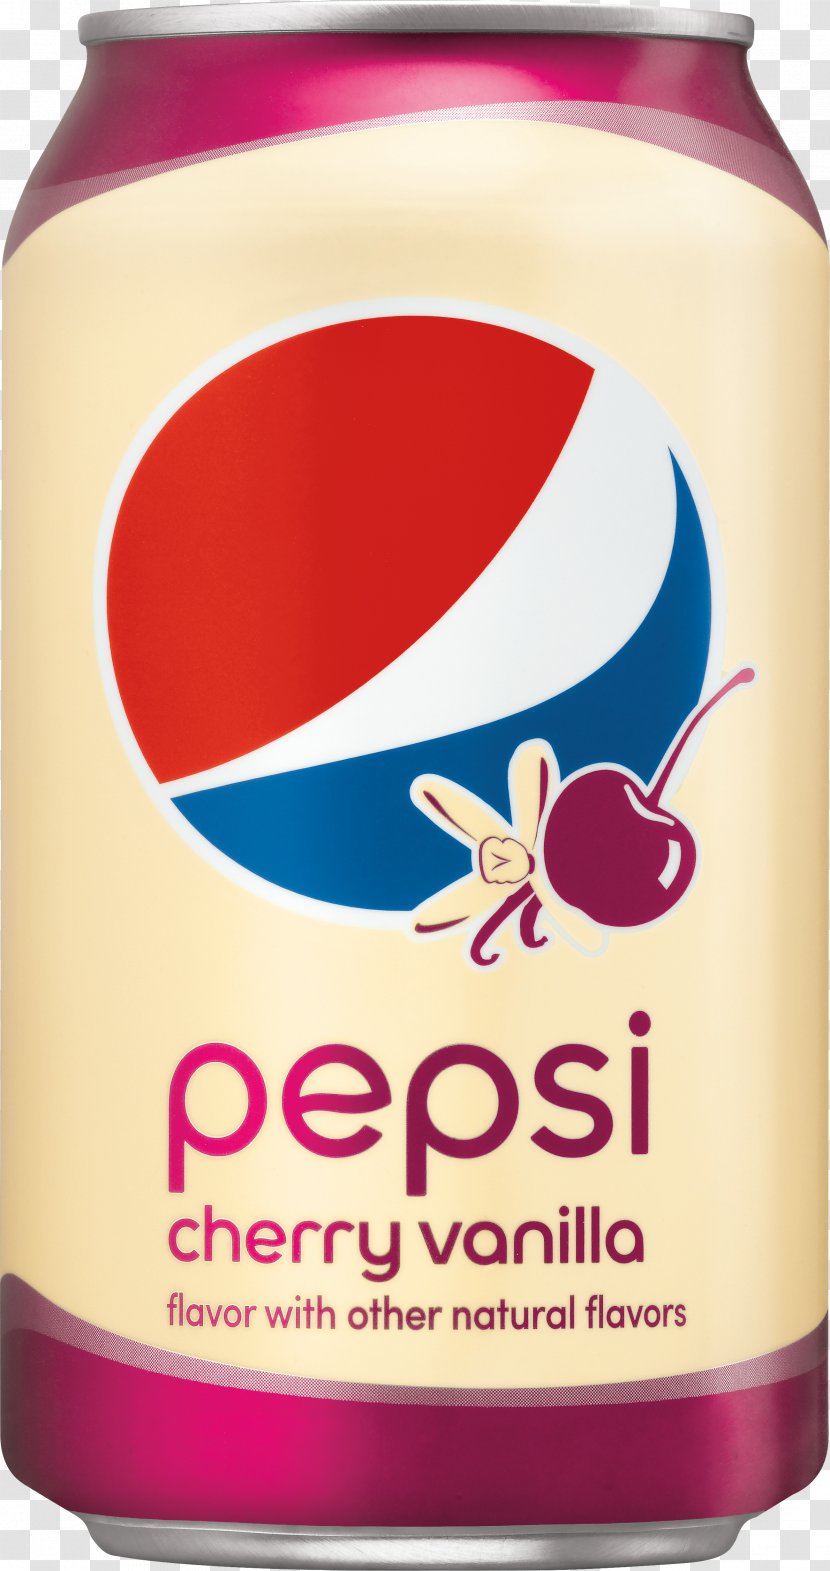 Pepsi Wild Cherry Fizzy Drinks Coca-Cola Vanilla - 7 Up Transparent PNG